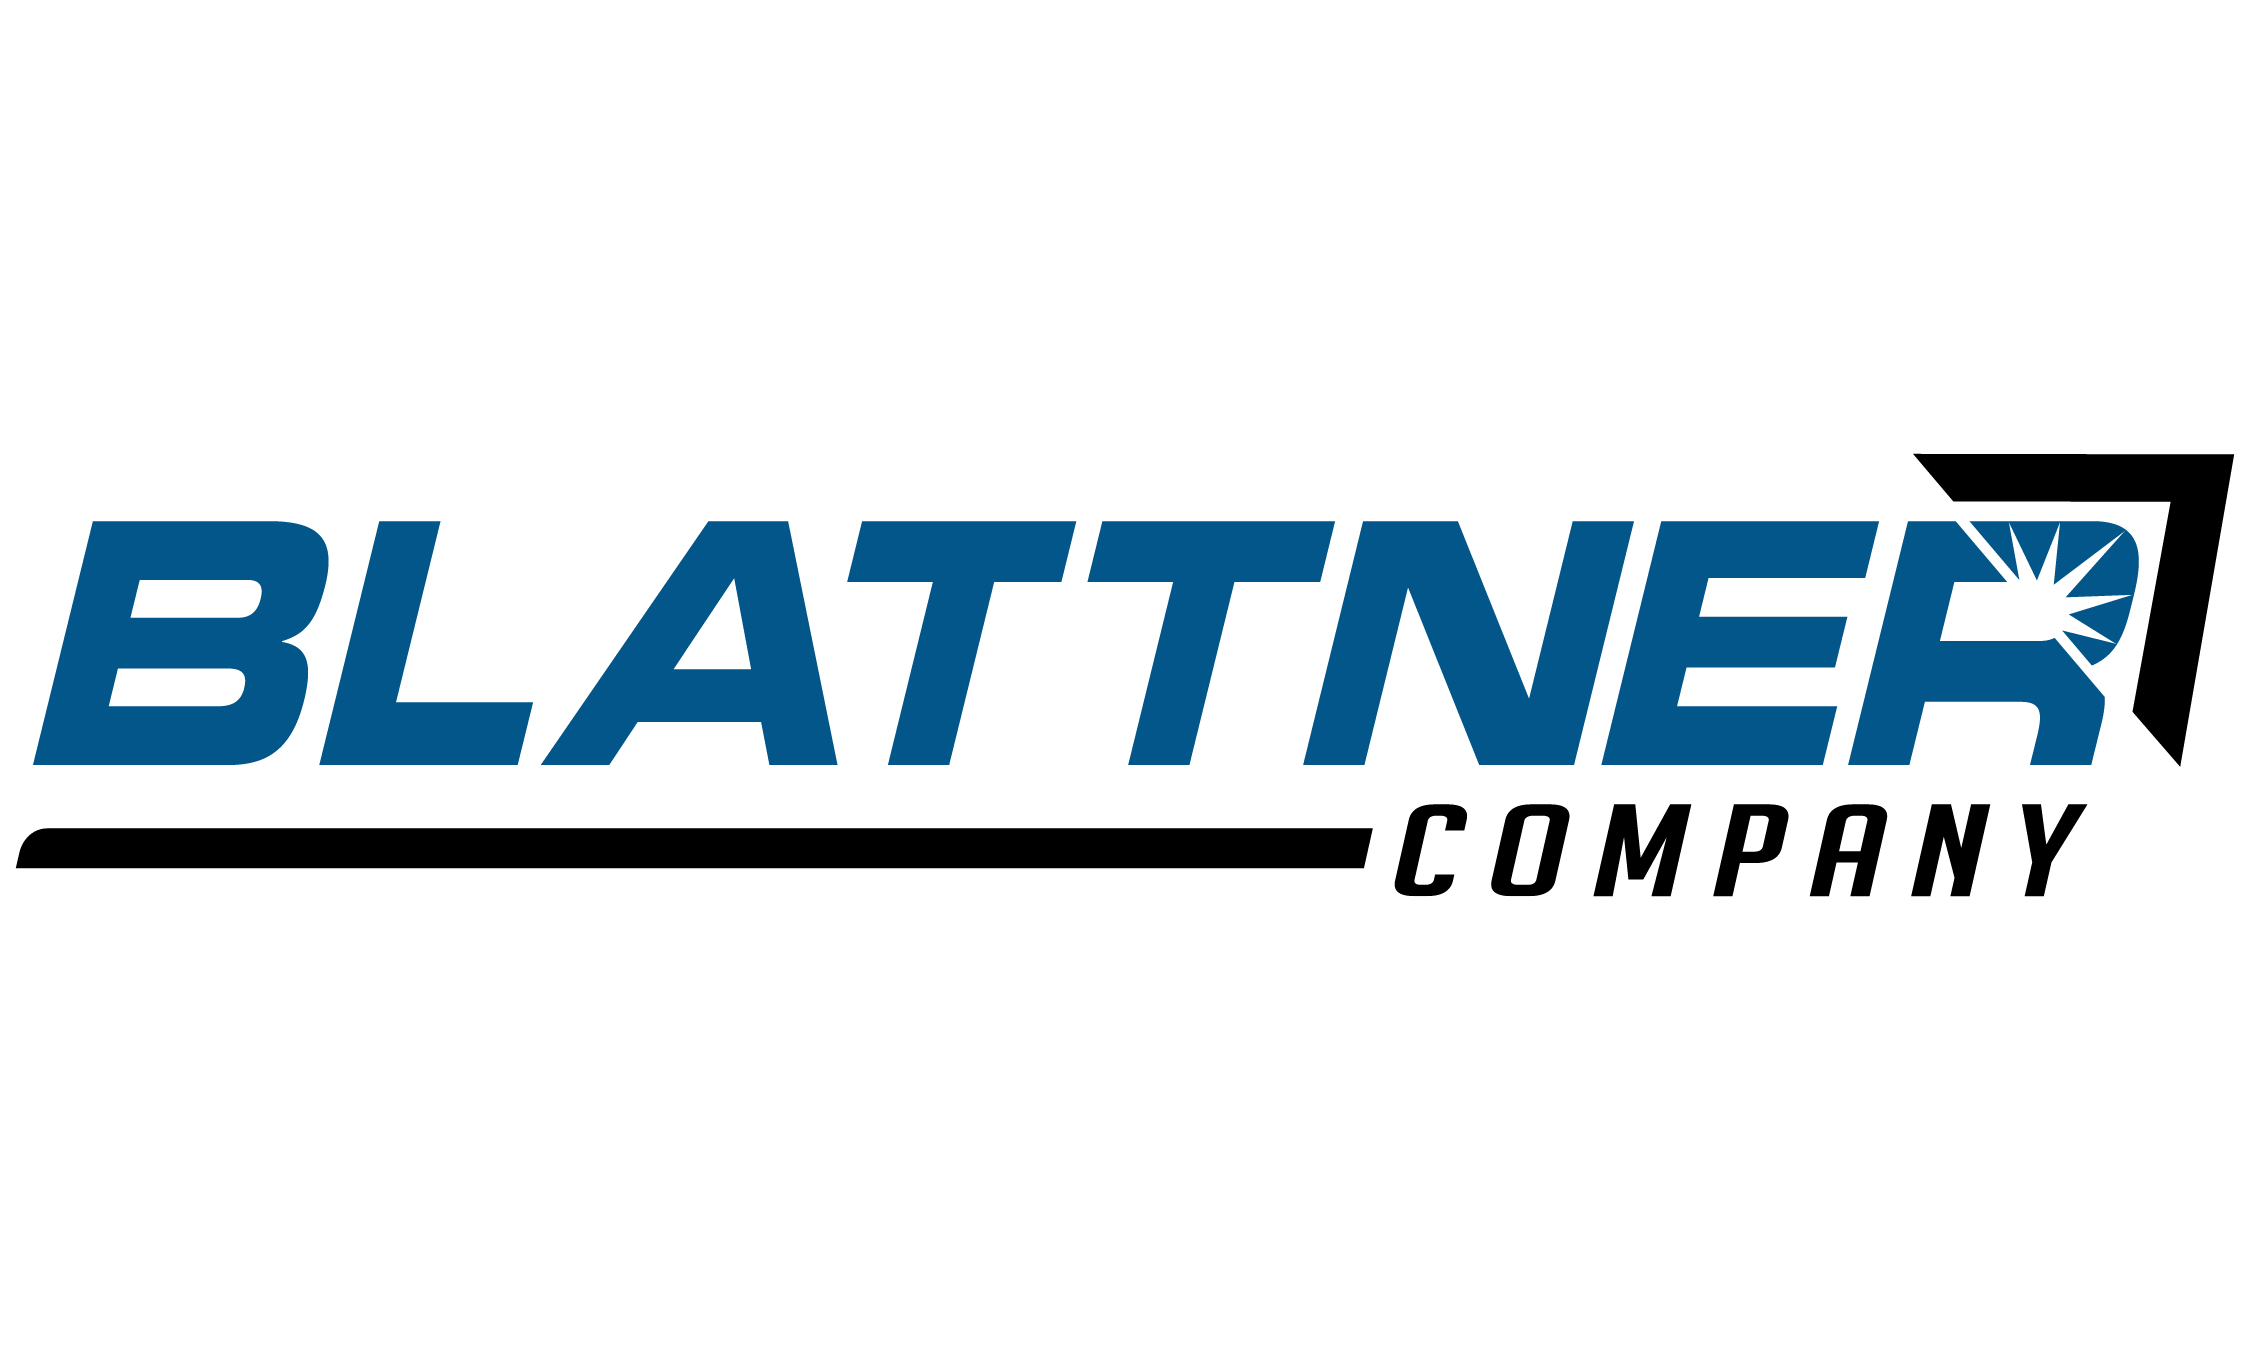 Blattner Company logo